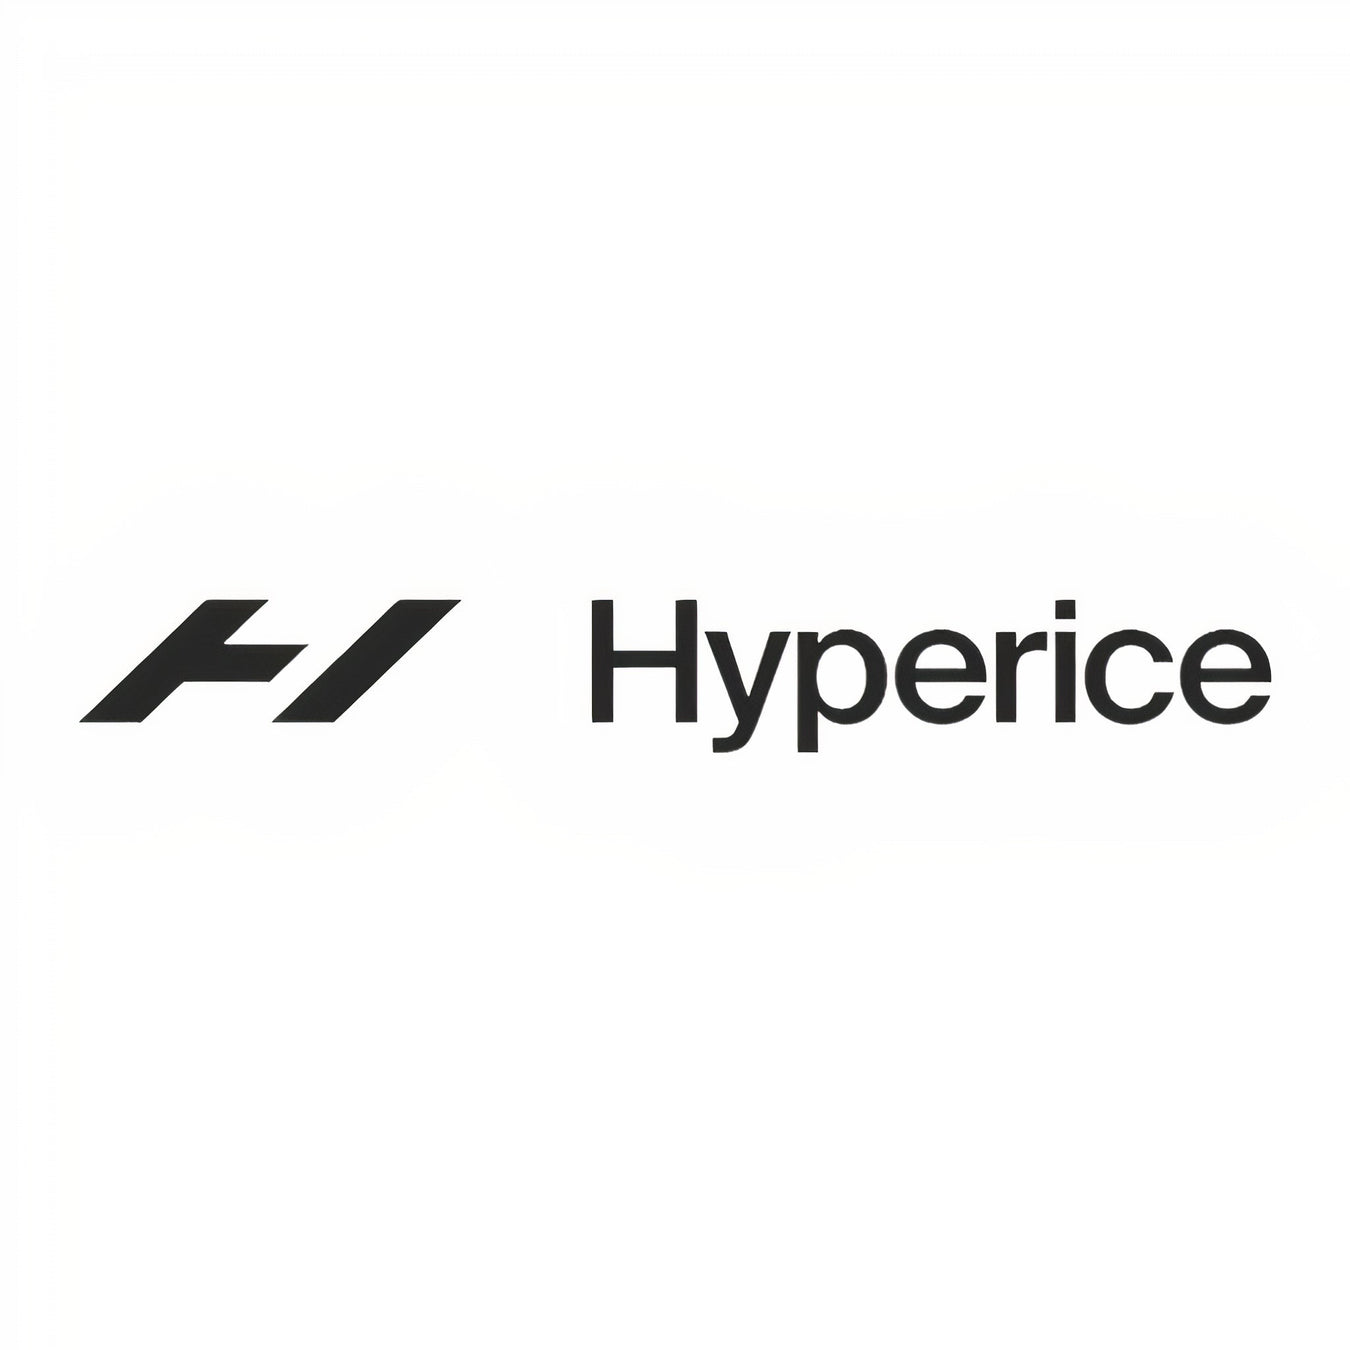 Hyperice logo - Looks like an innovative brand who strive for more.